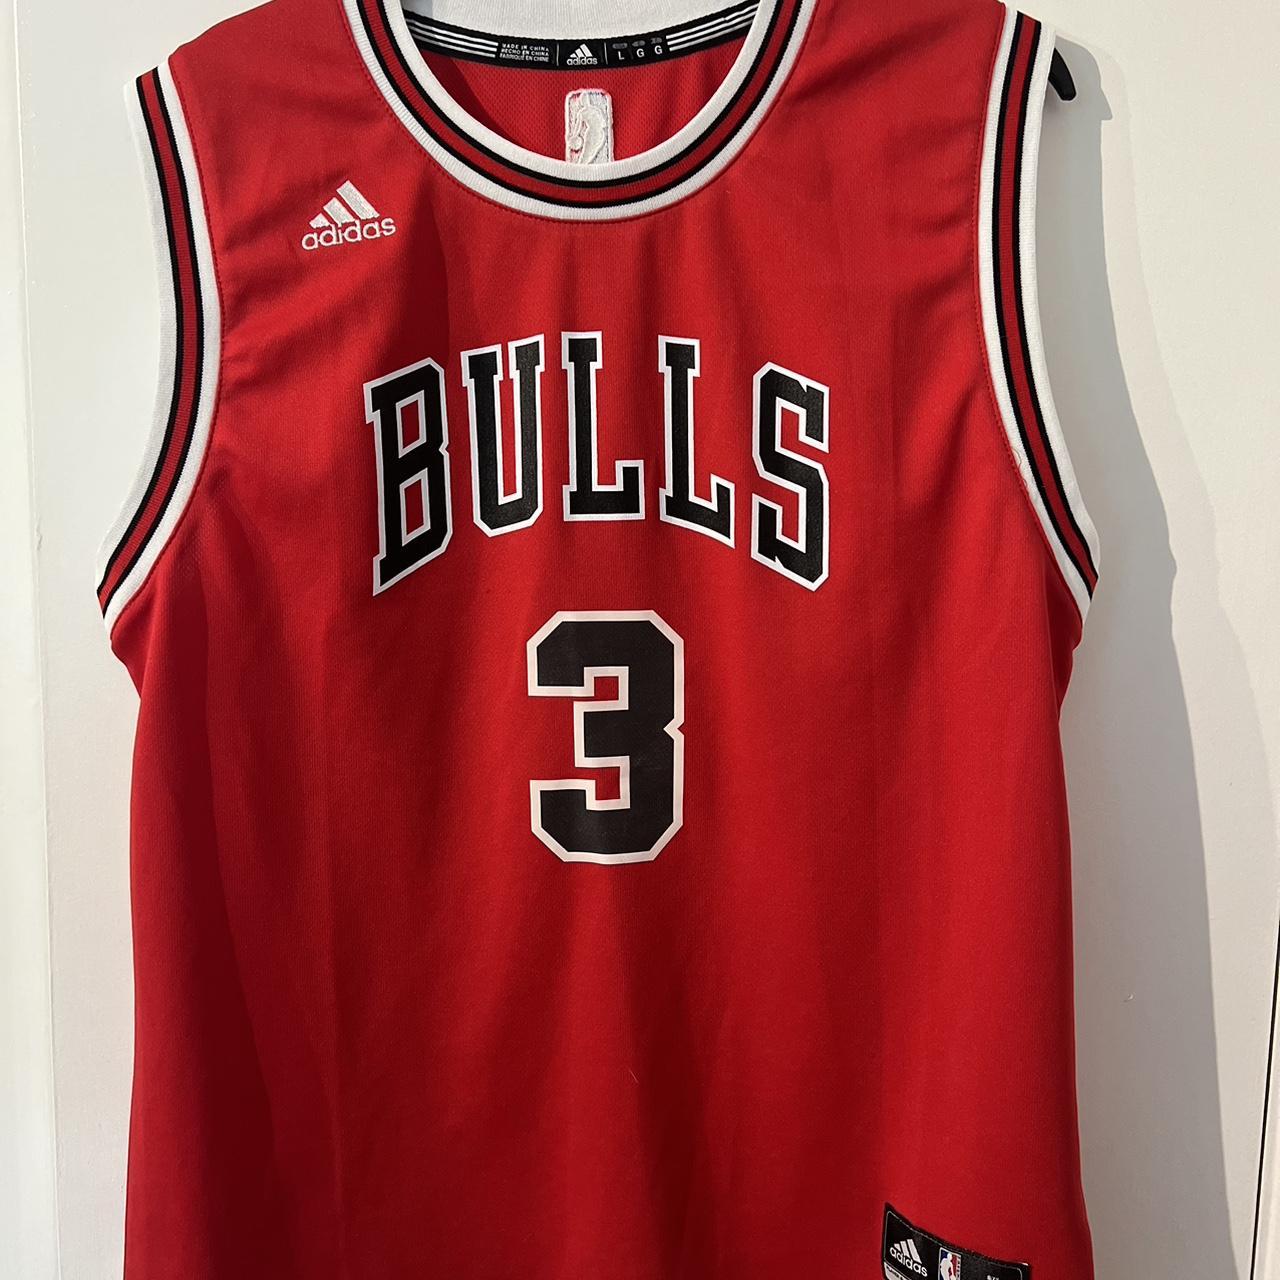 Adidas NBA Chicago Bulls Dwyane Wade Basketball Jersey